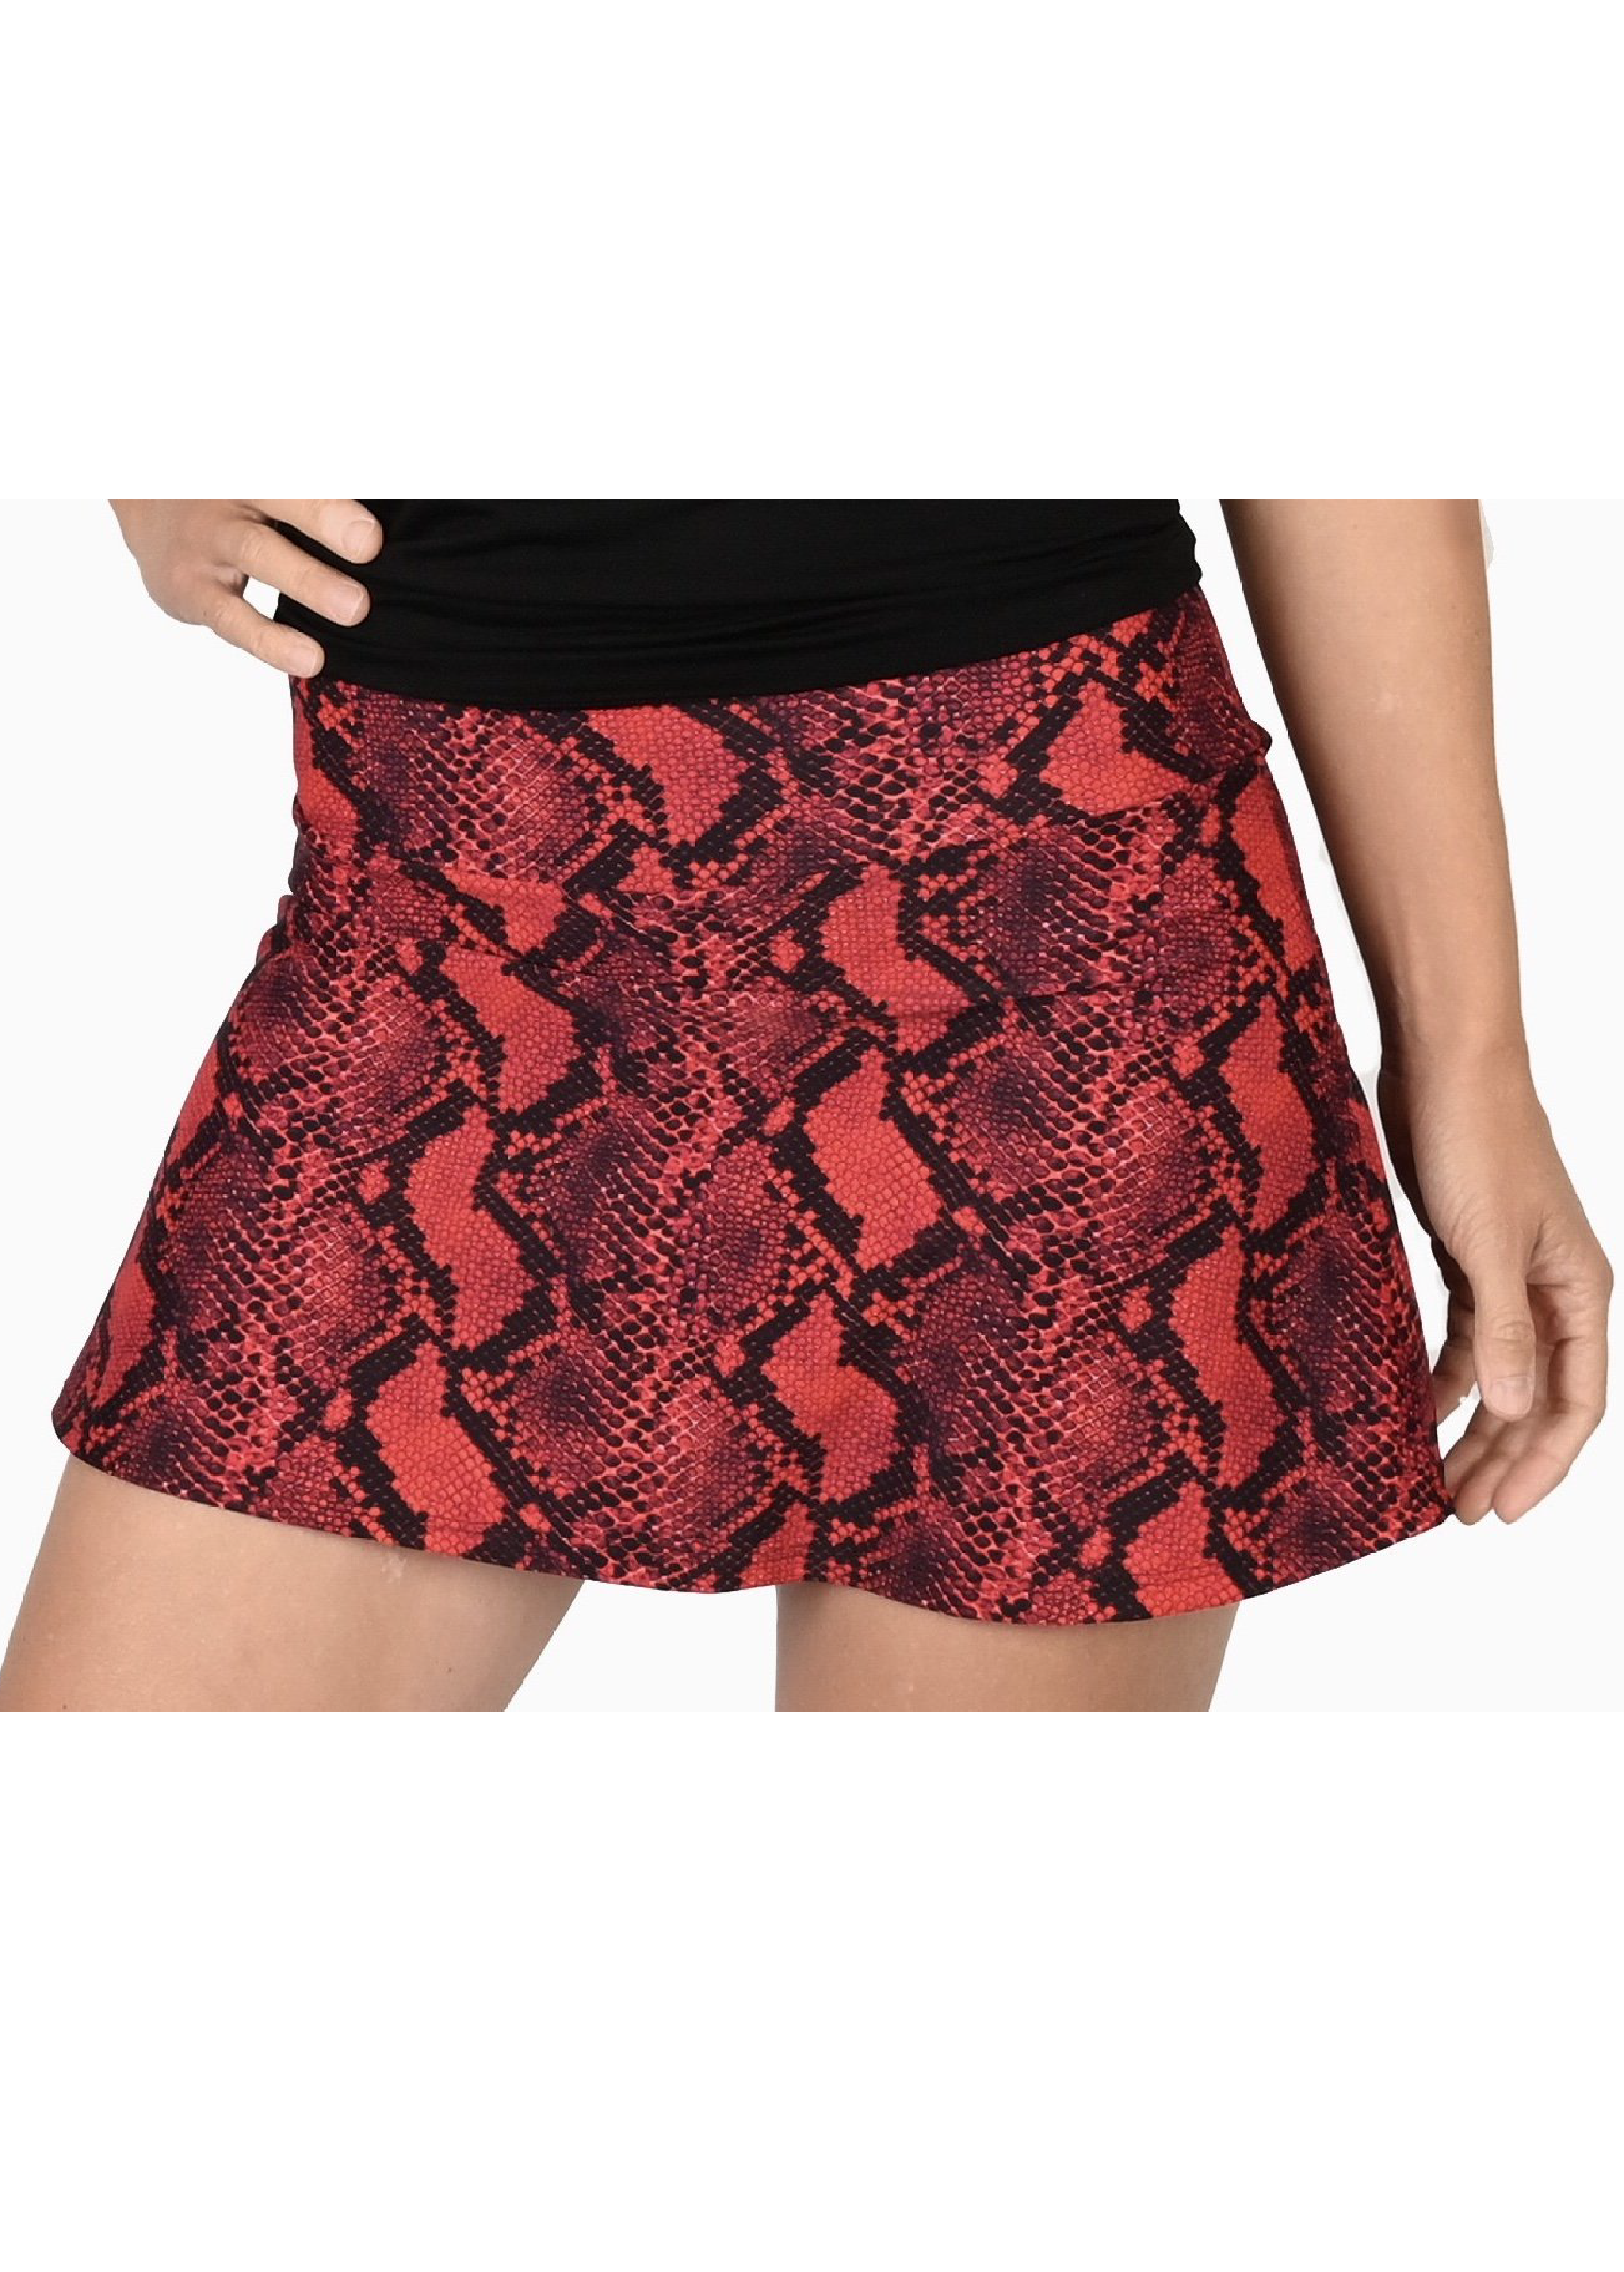 Red and Black Snakeskin Print Tennis Skirt Black Shorts